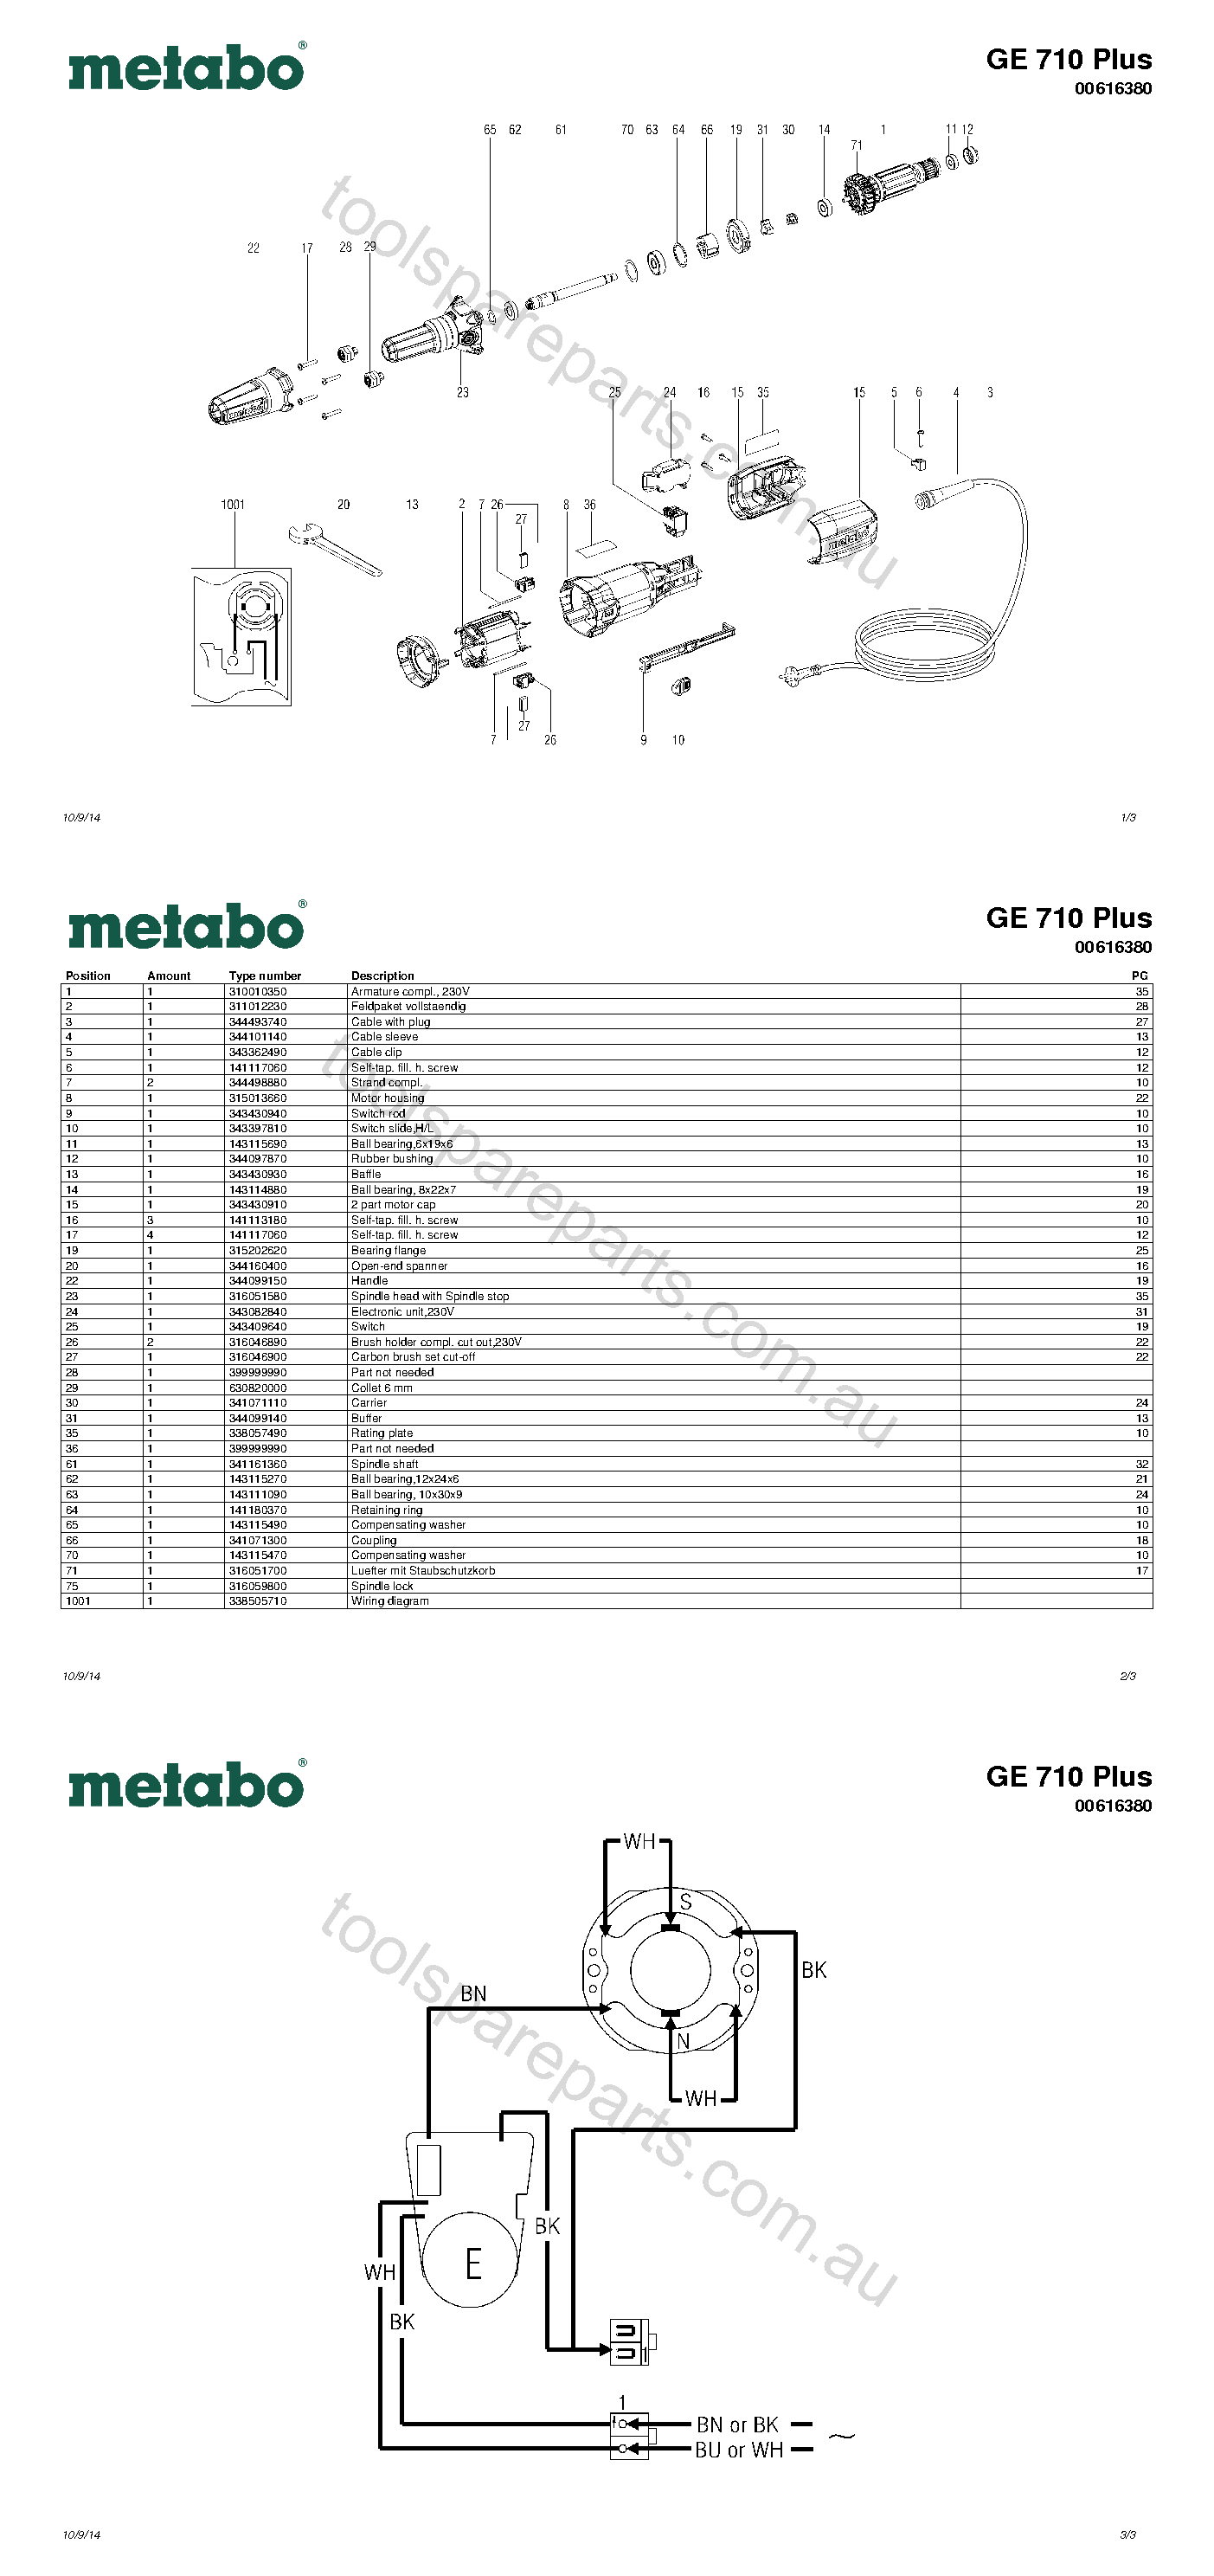 Metabo GE 710 Plus 00616380  Diagram 1